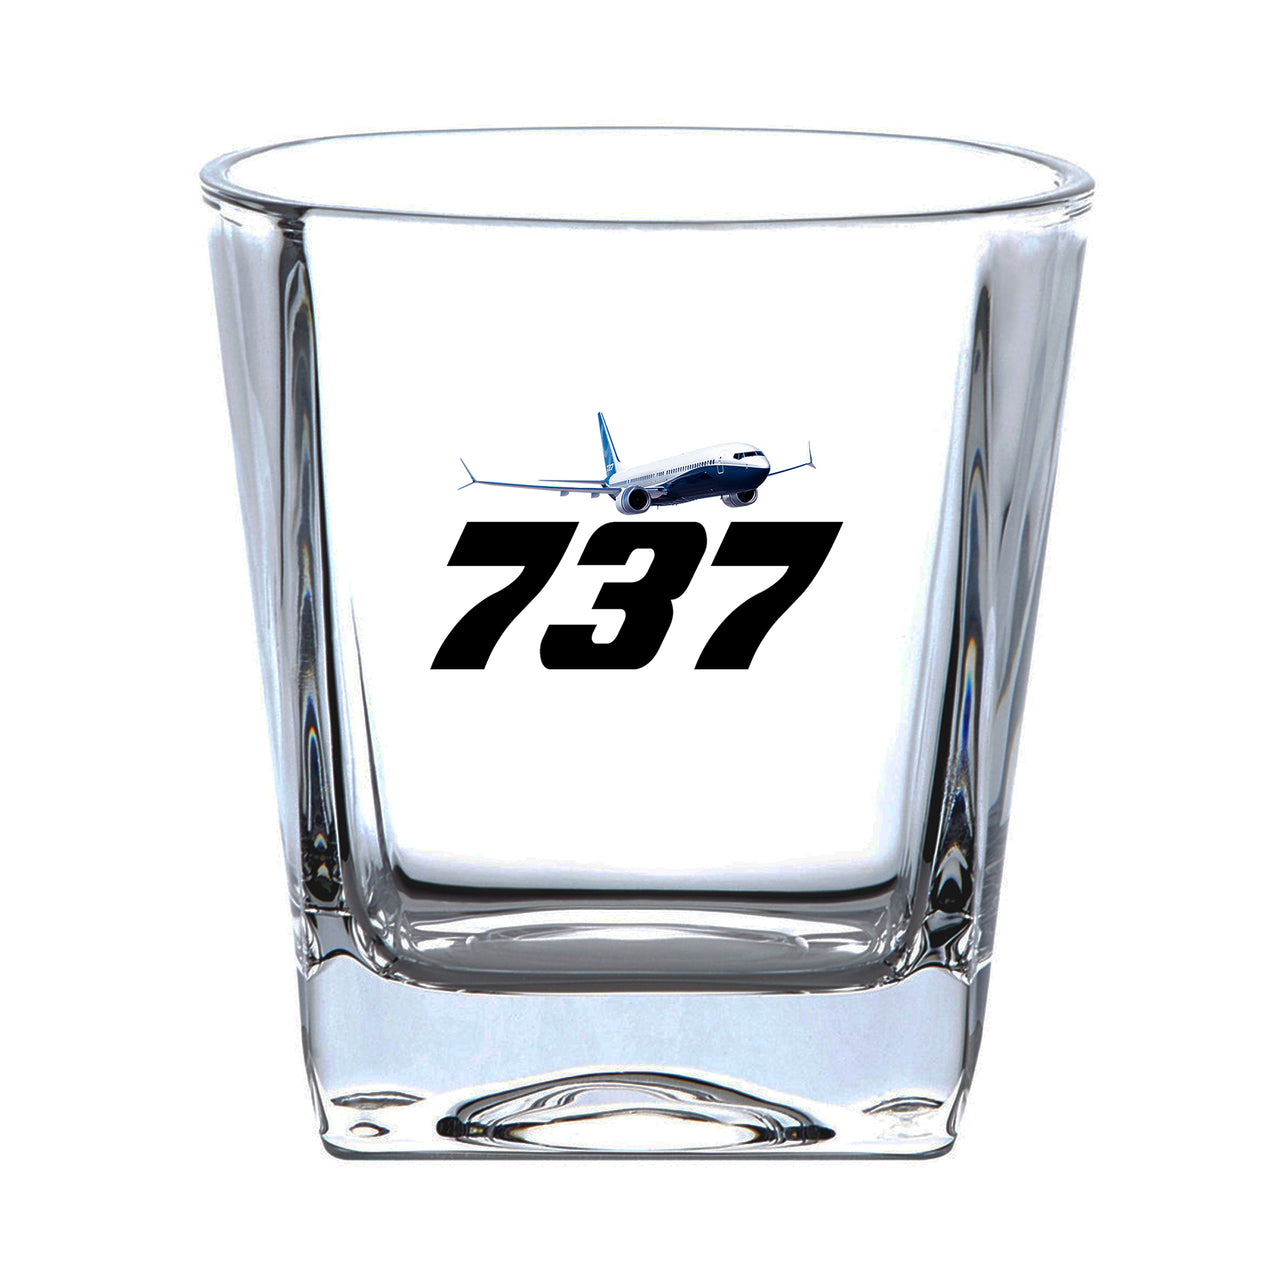 Super Boeing 737-800 Designed Whiskey Glass